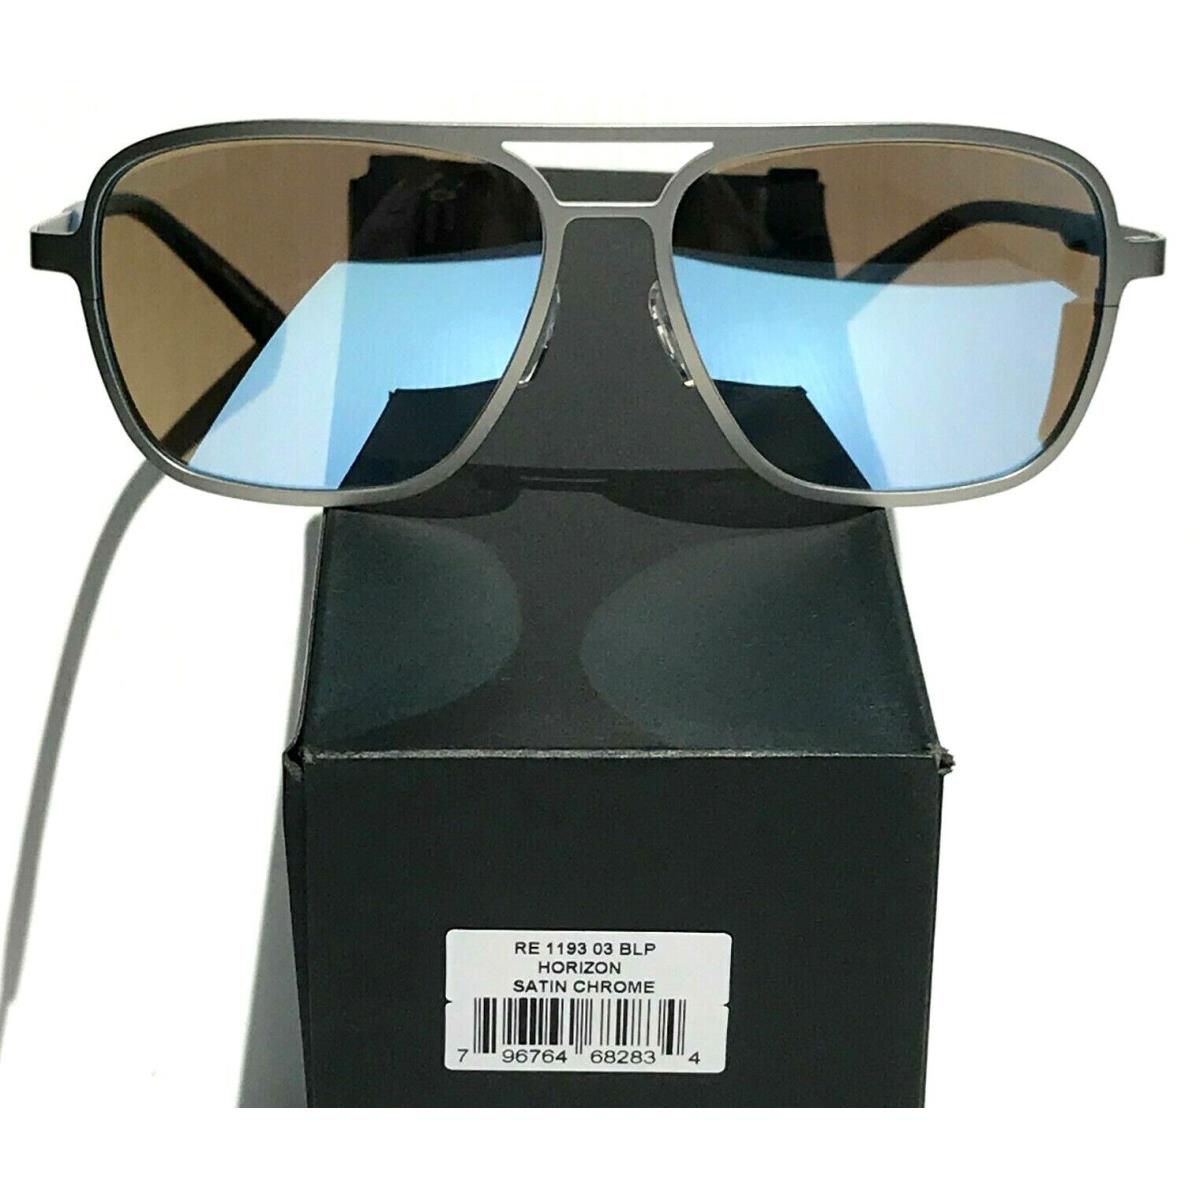 Revo sunglasses Horizon - Silver Frame, Blue Lens